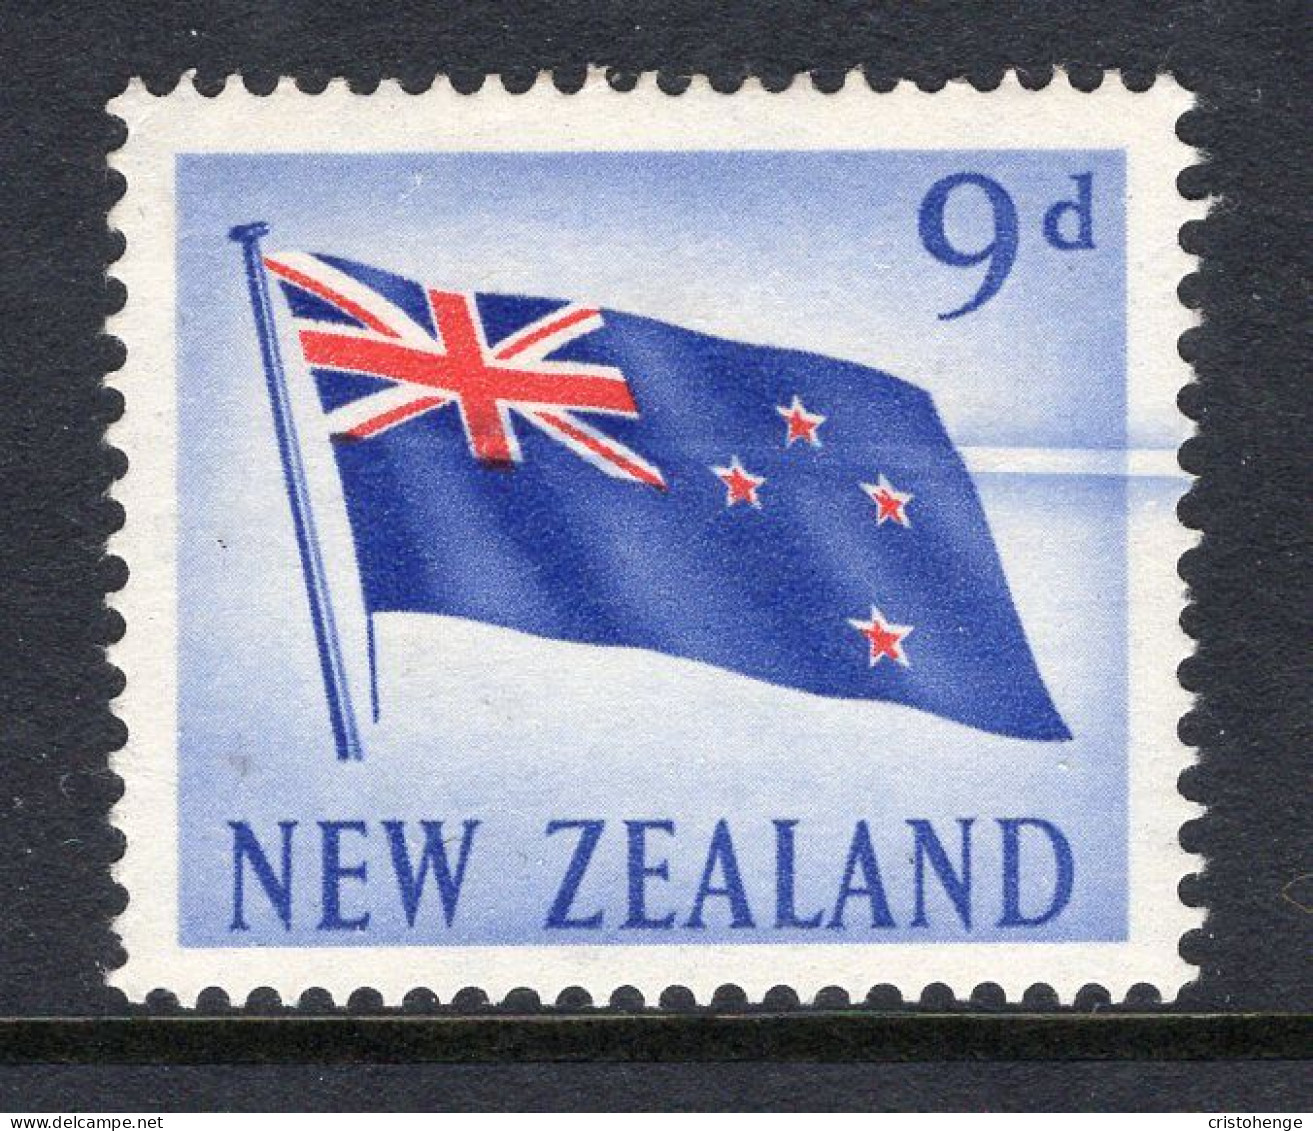 New Zealand 1960-66 Pictorials - 9d Flag - ERROR Doctor Blade Flaw HM (SG 790 Variety) - Neufs